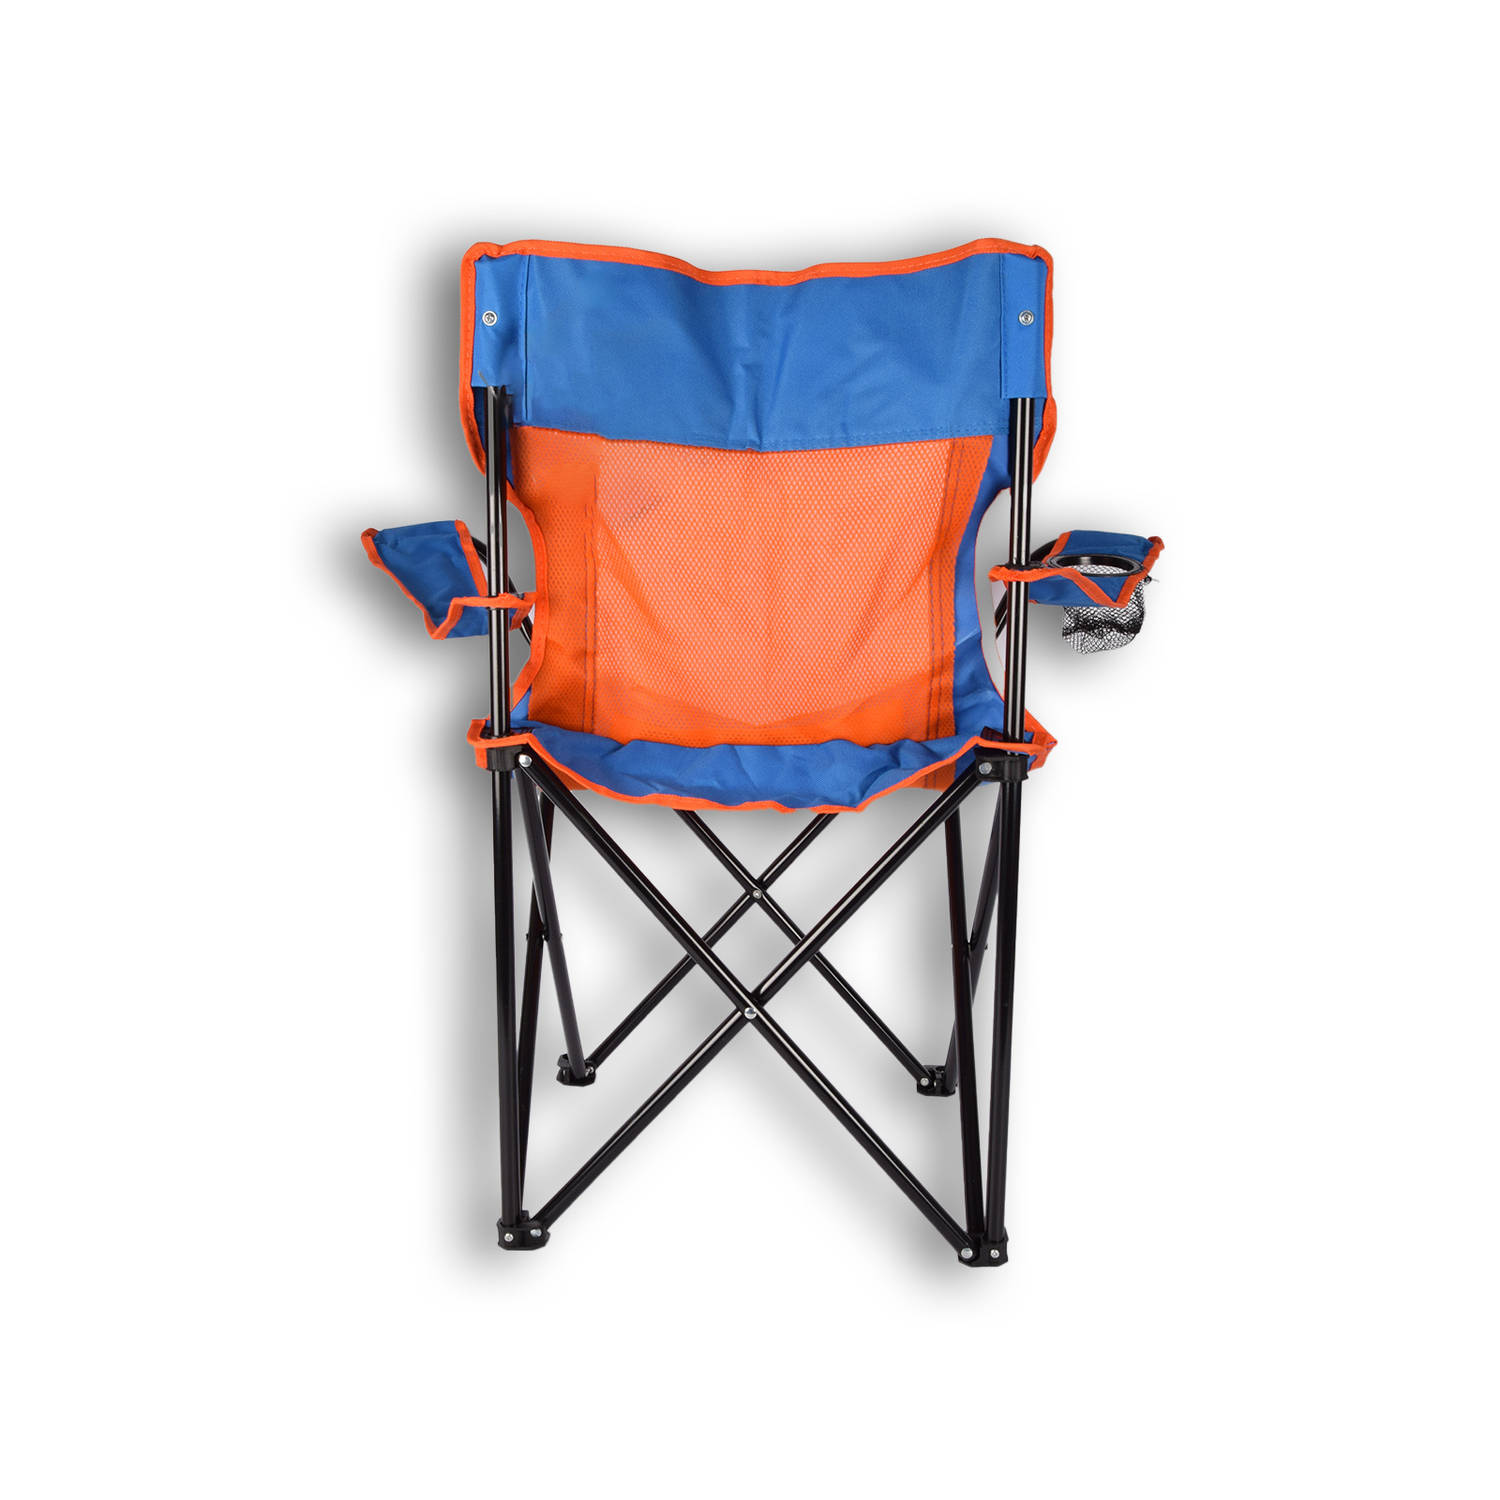 Campingstoel stoel Opvouwbare stoel Blauw & Oranje Vouwstoel Kampeerstoel Zithoogte 40 cm Buitenstoe